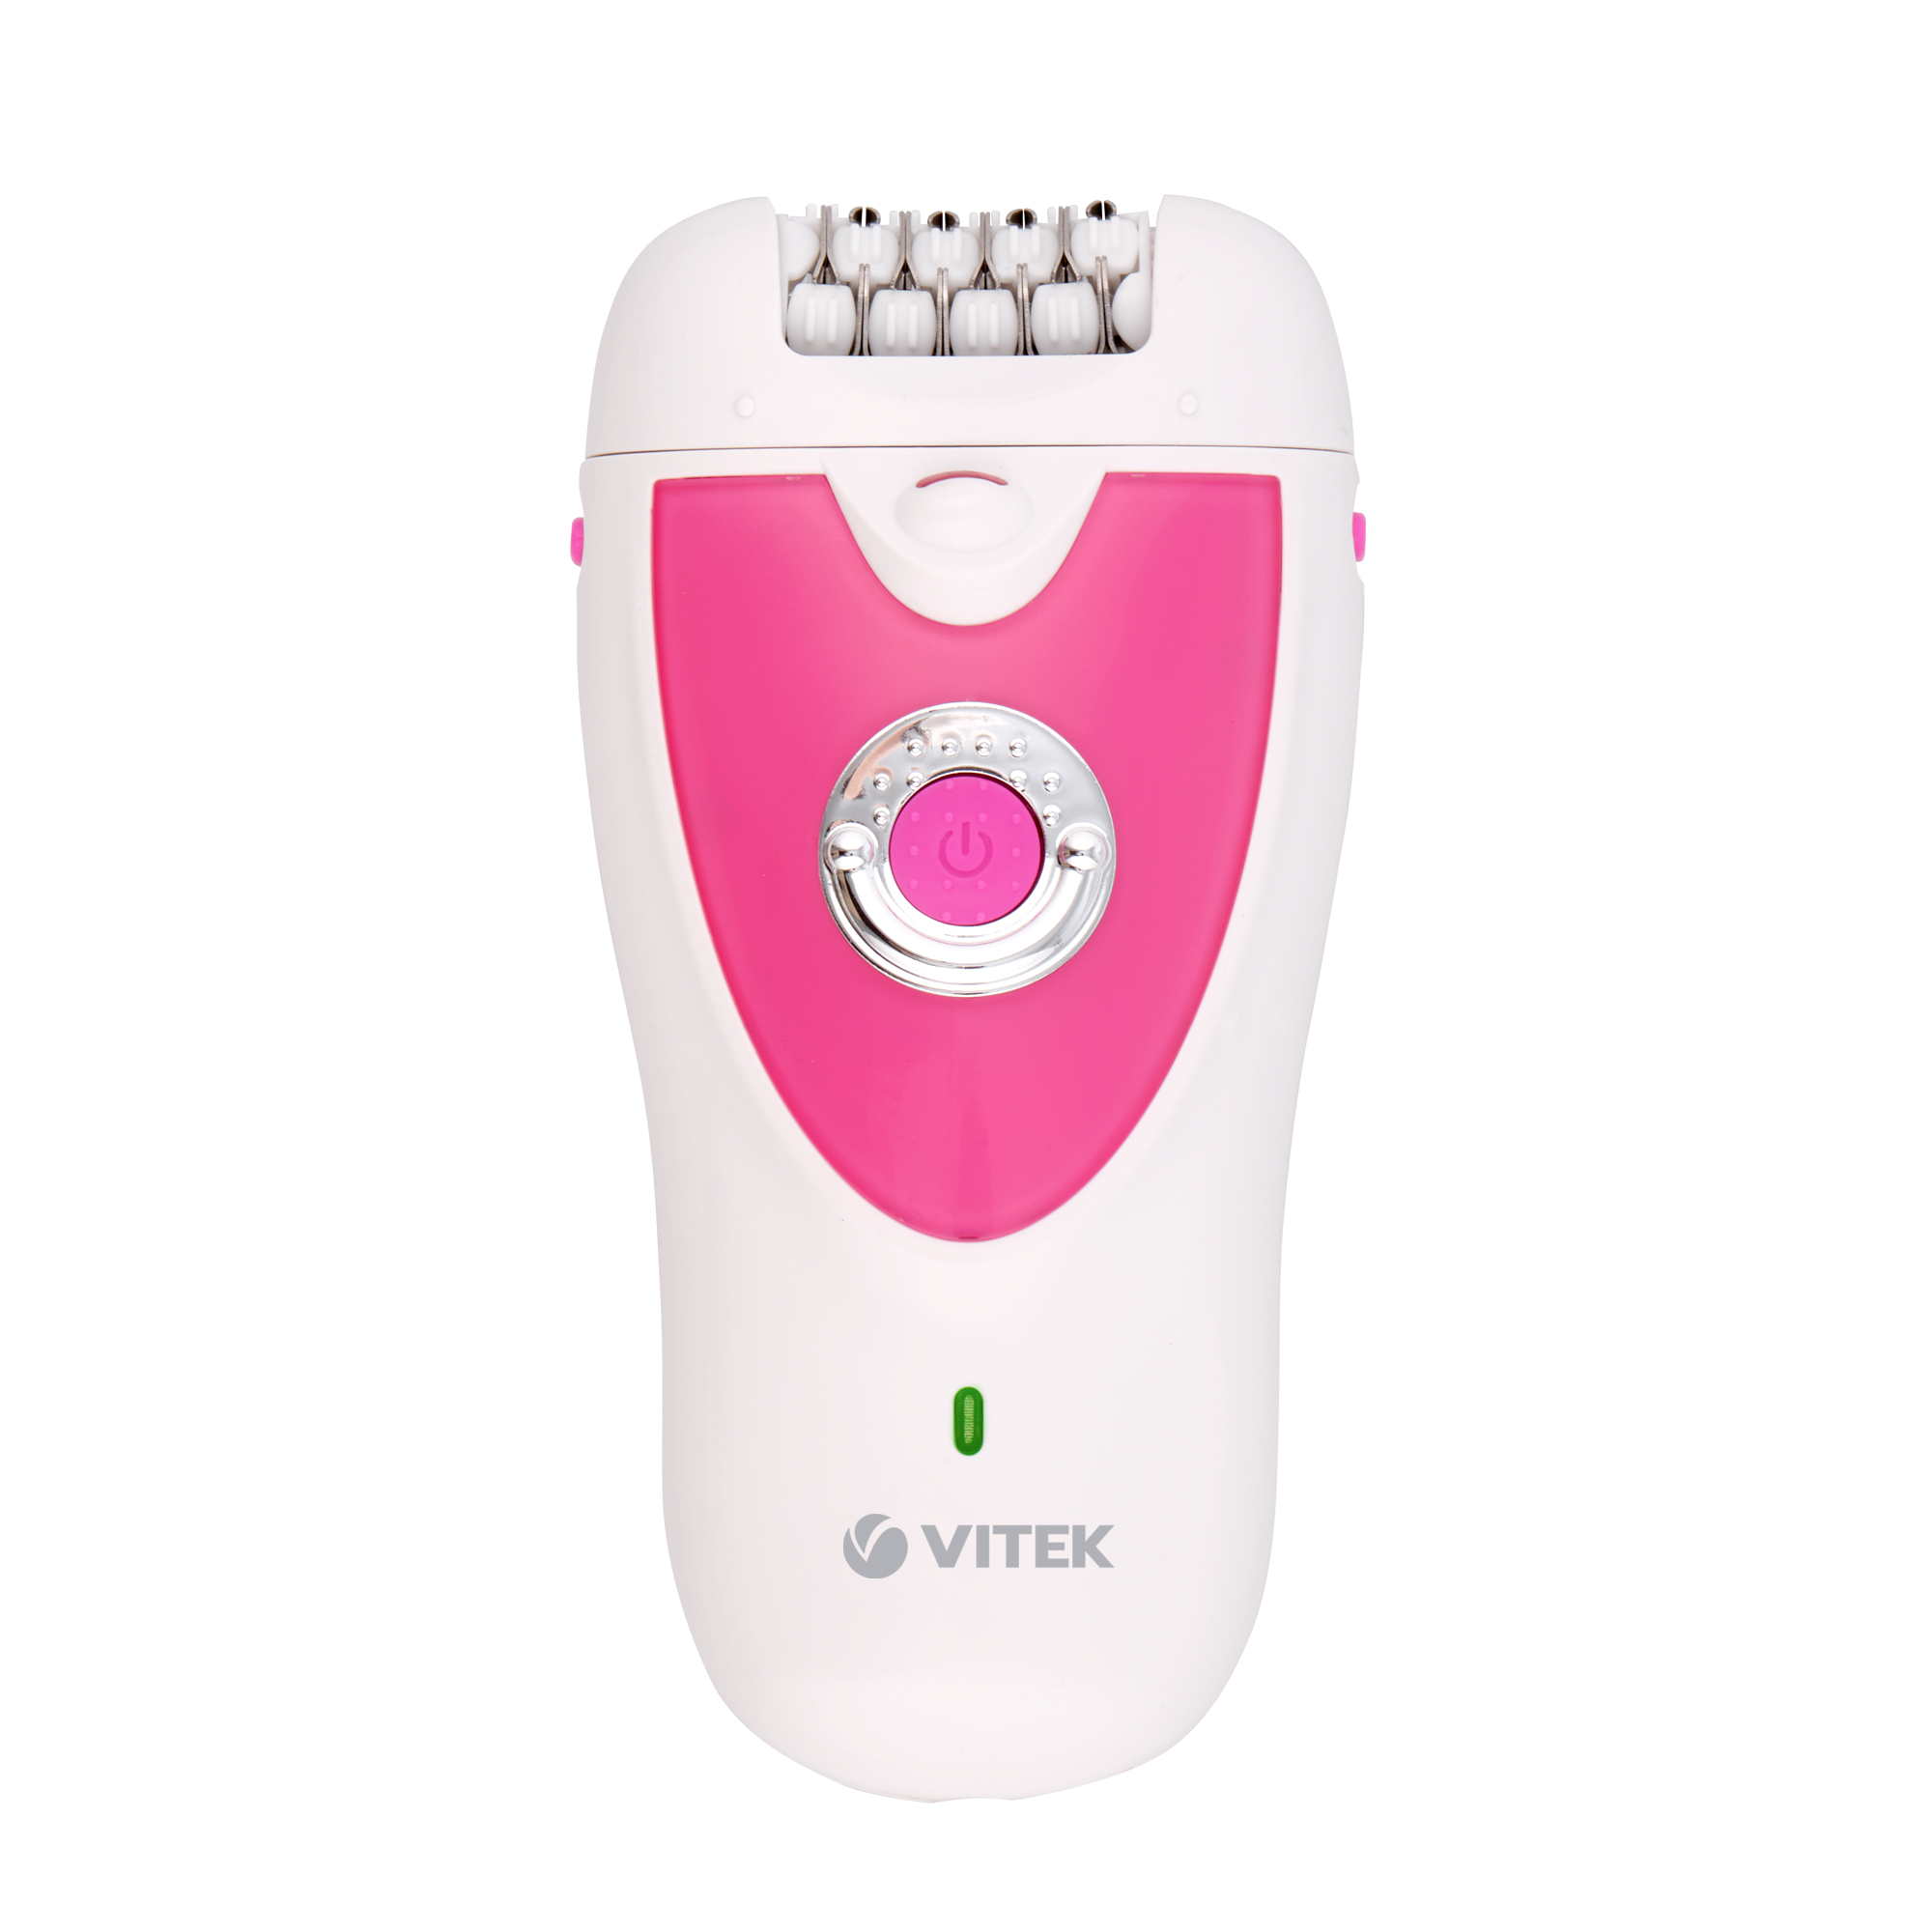 Эпилятор VITEK VT-2244 белый, розовый эпилятор vitek vt 2244 белый розовый